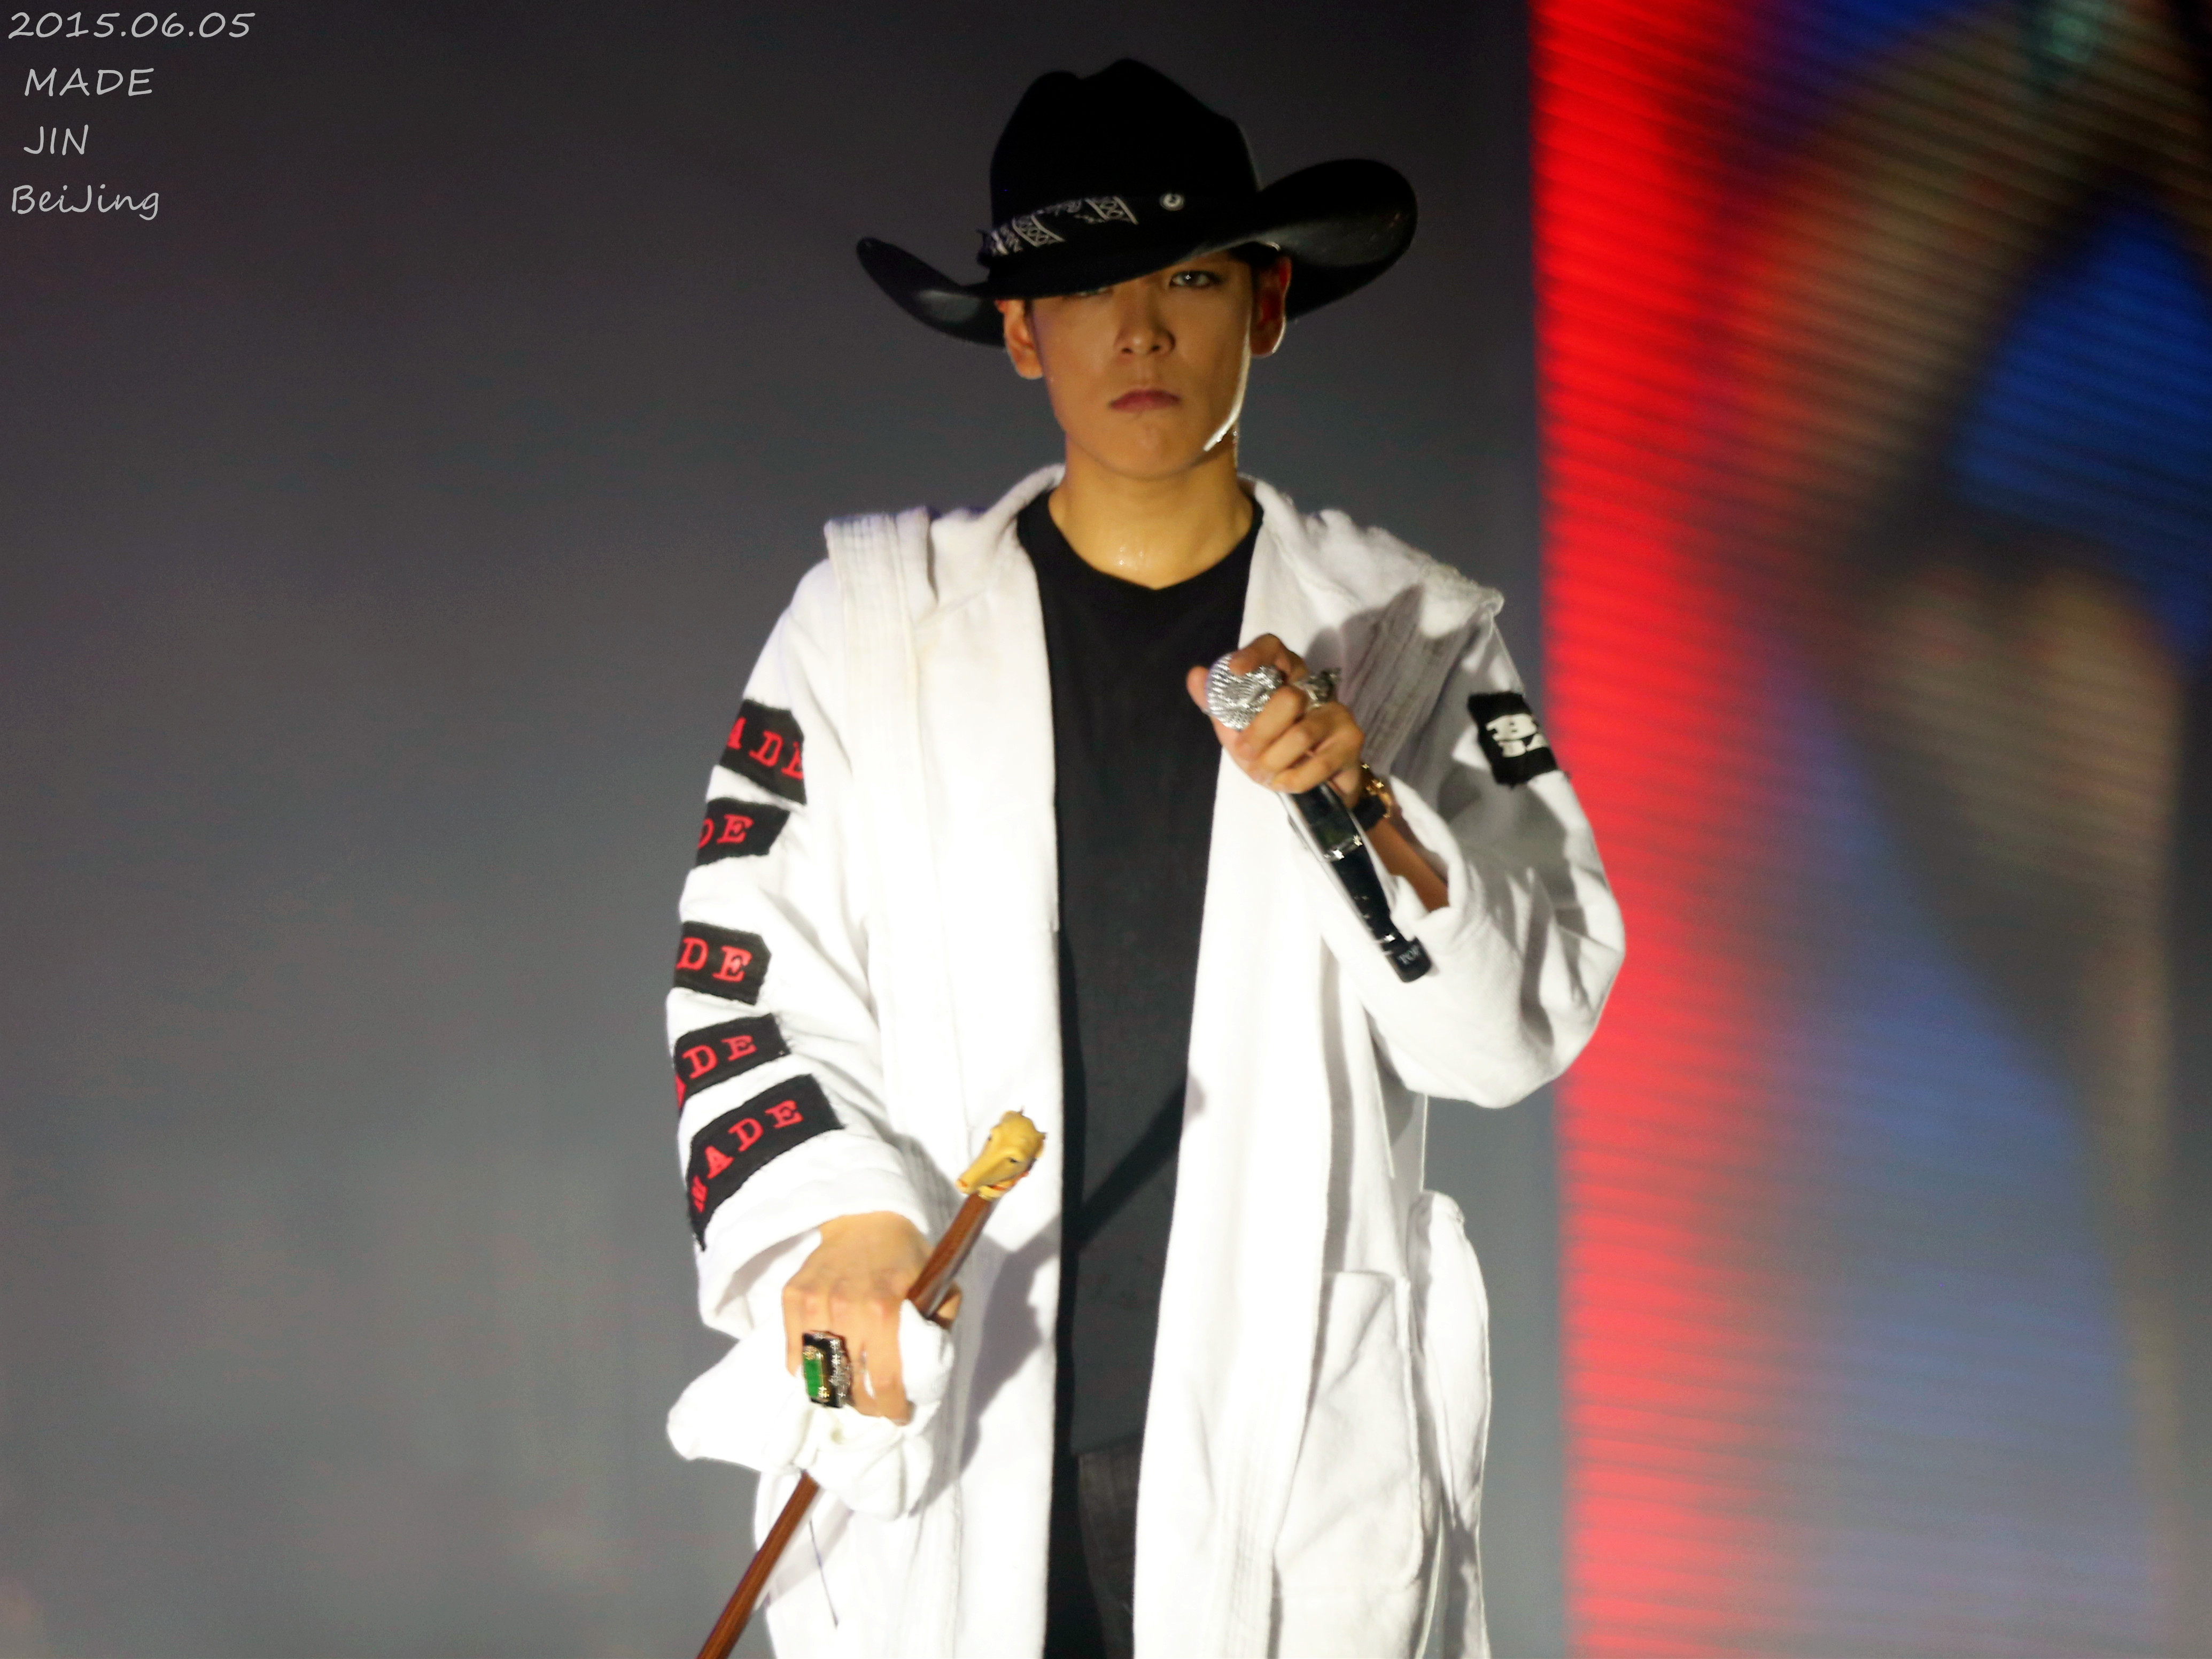 BIGBANG - Made Tour 2015 - Beijing - 05jun2015 - G-Jin - 08.jpg